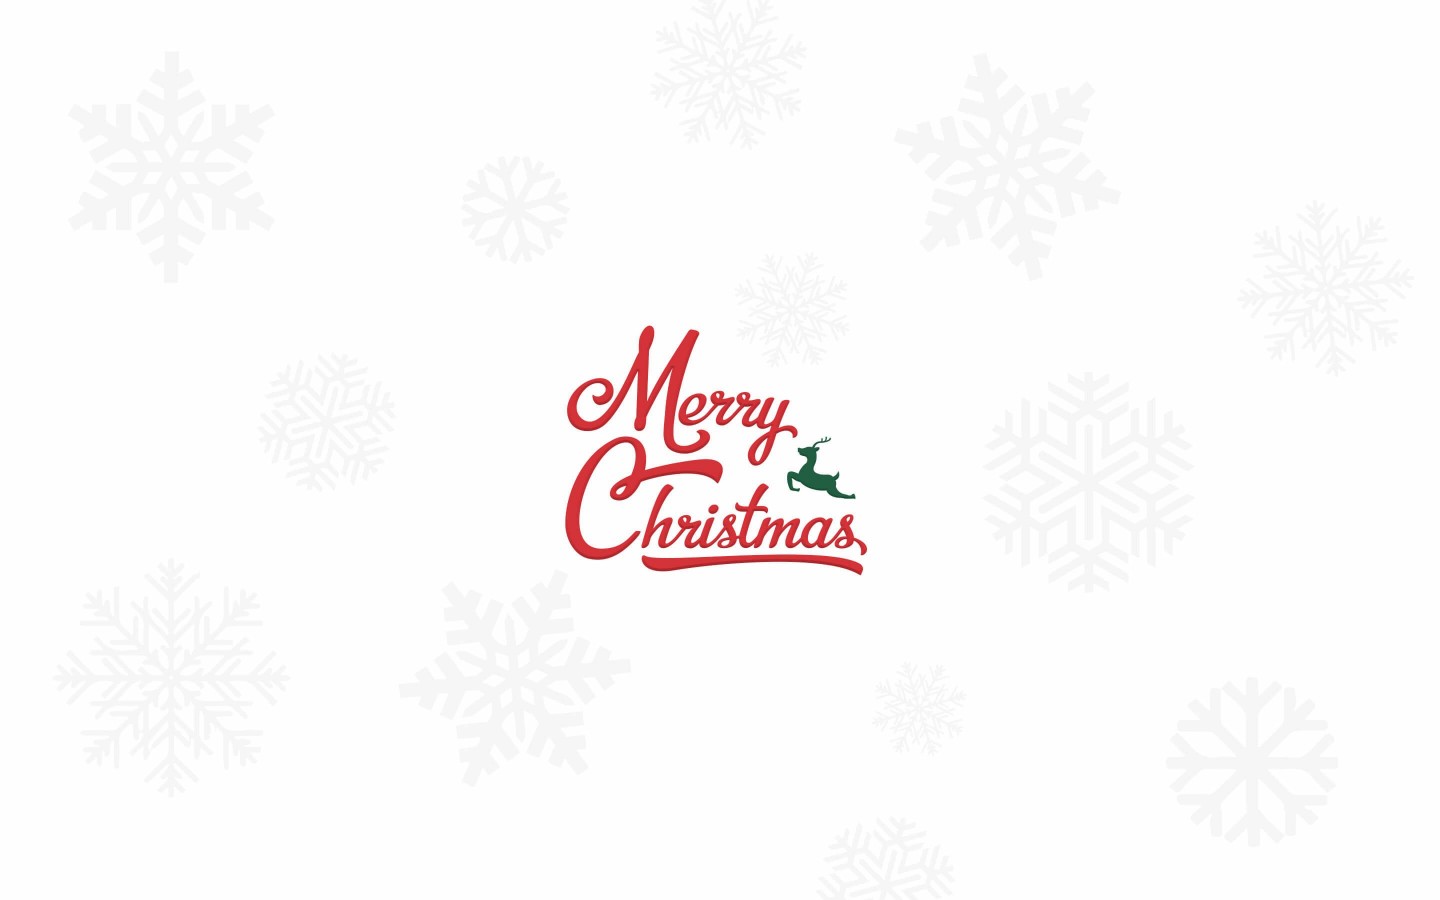 Merry Christmas Wallpaper for Desktop 1440x900